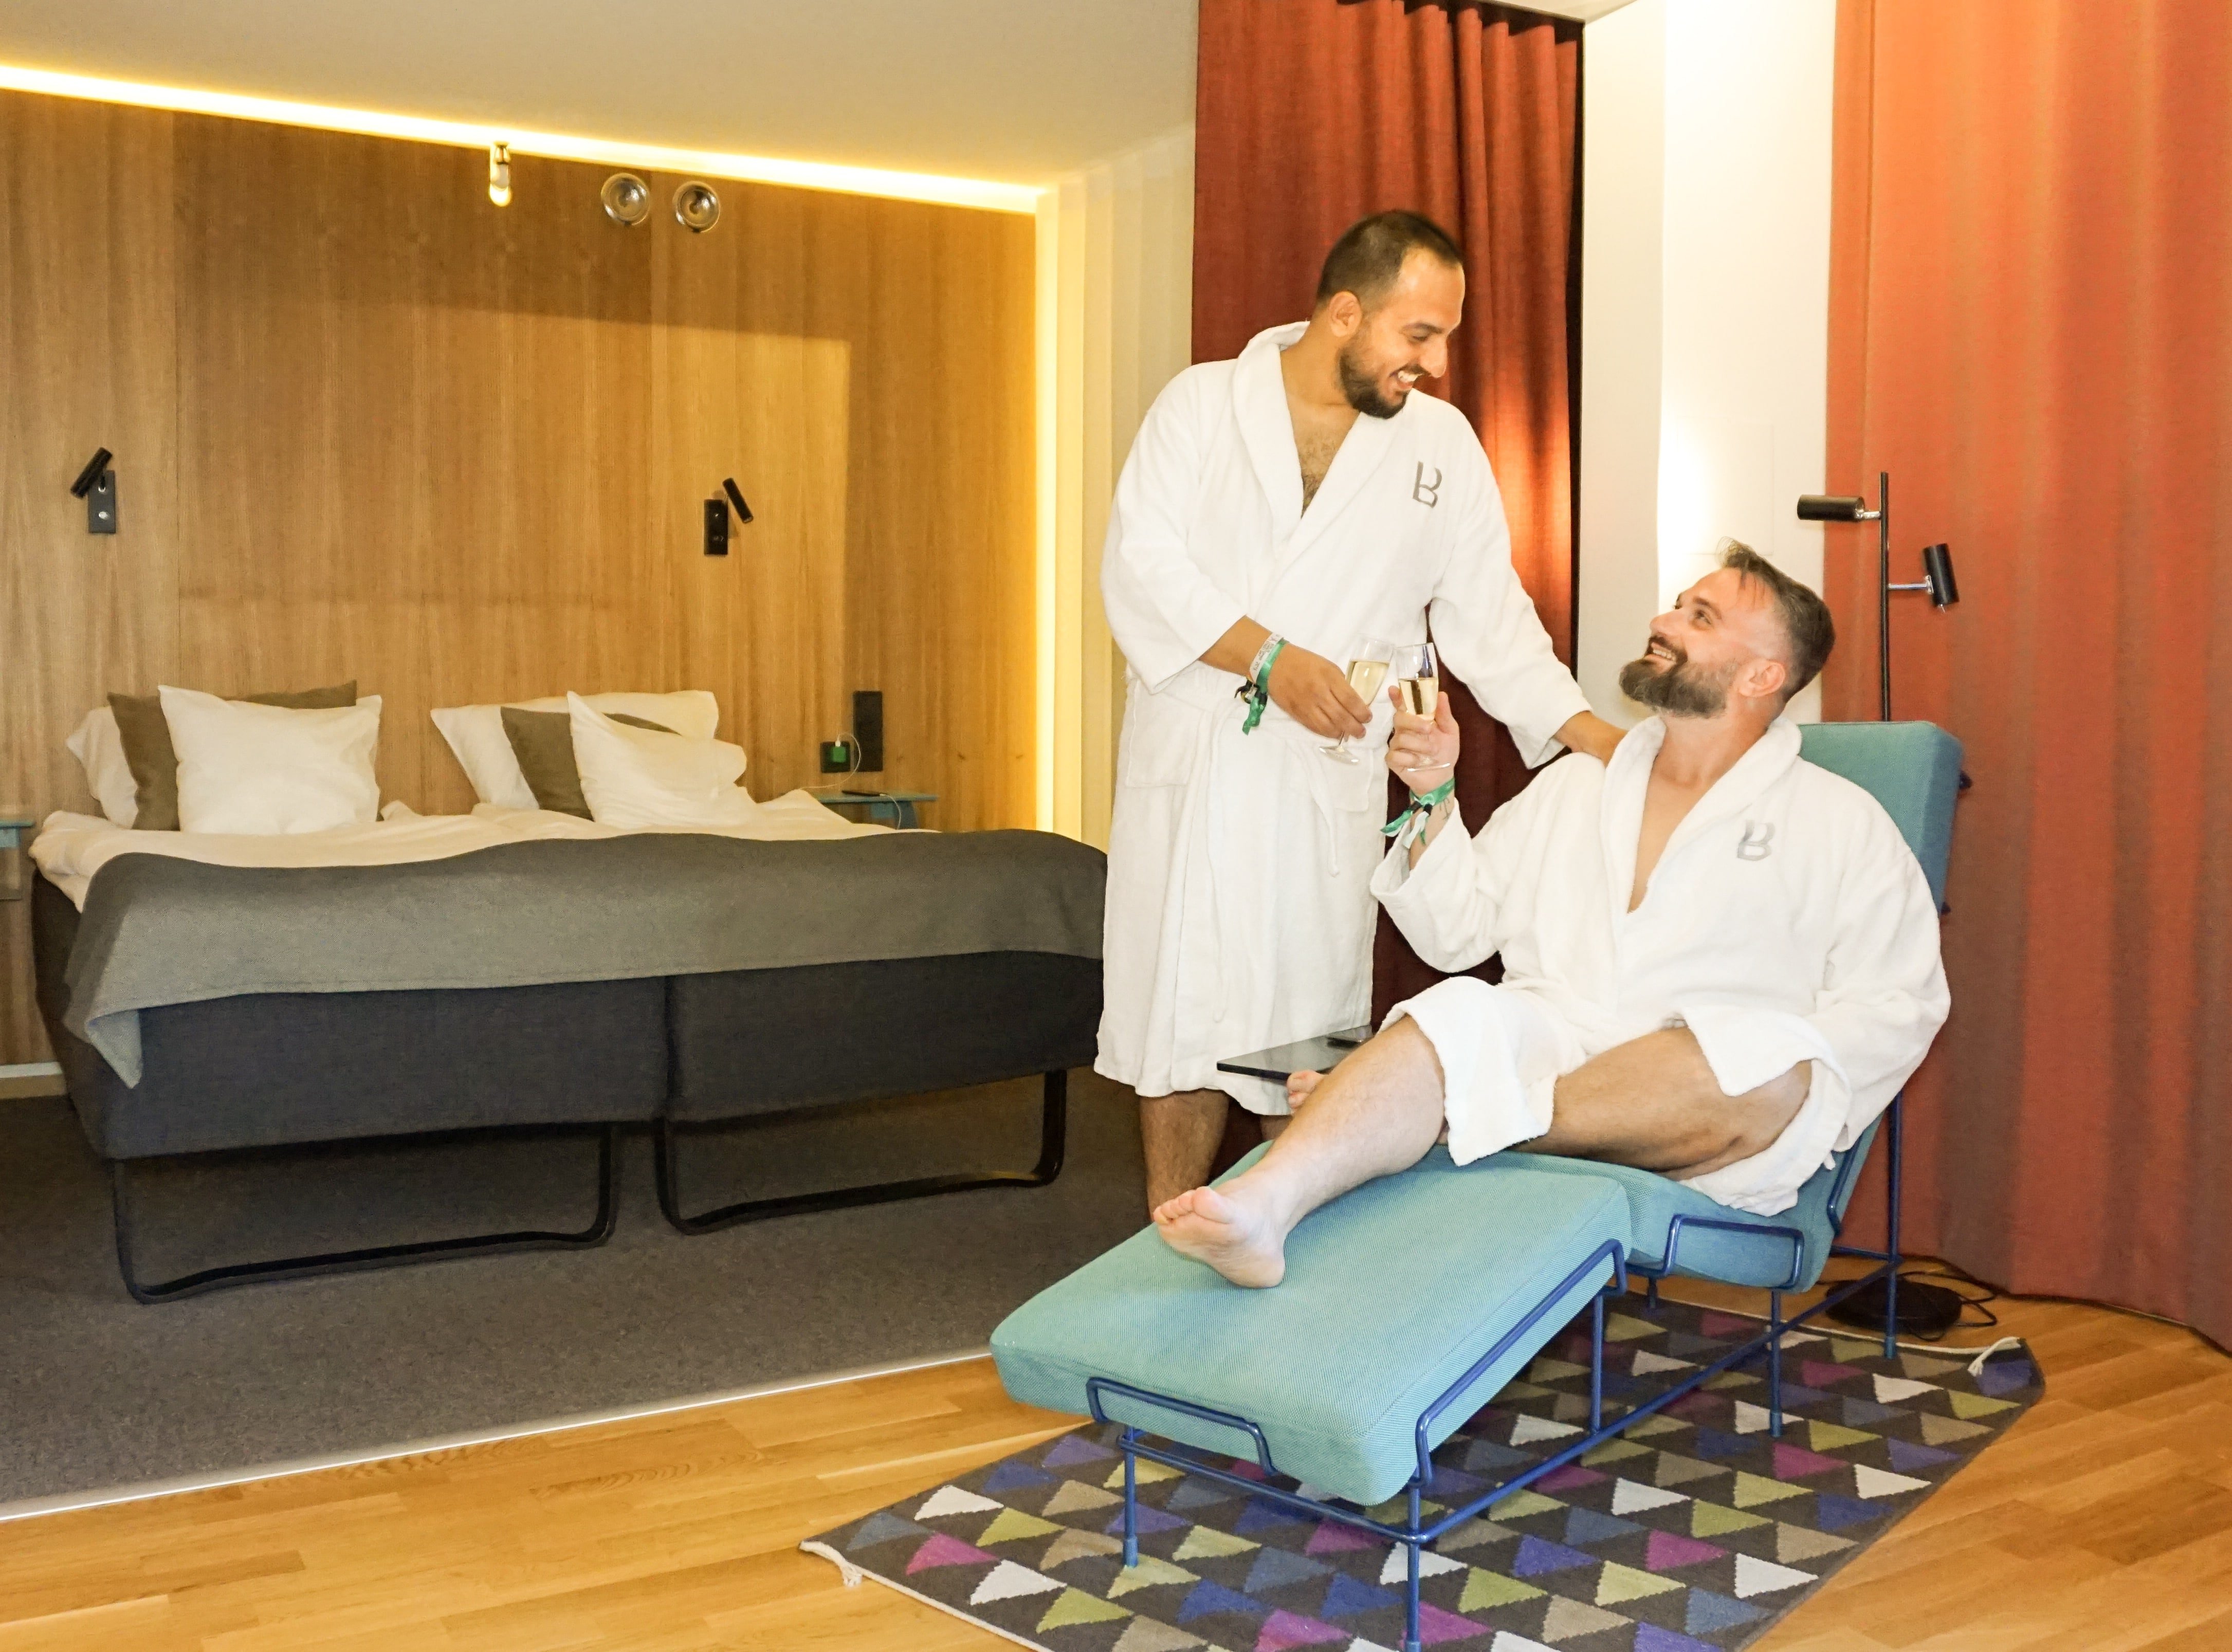 Hotel Birger Jarl: Recensione dell’hotel gay friendly a Stoccolma